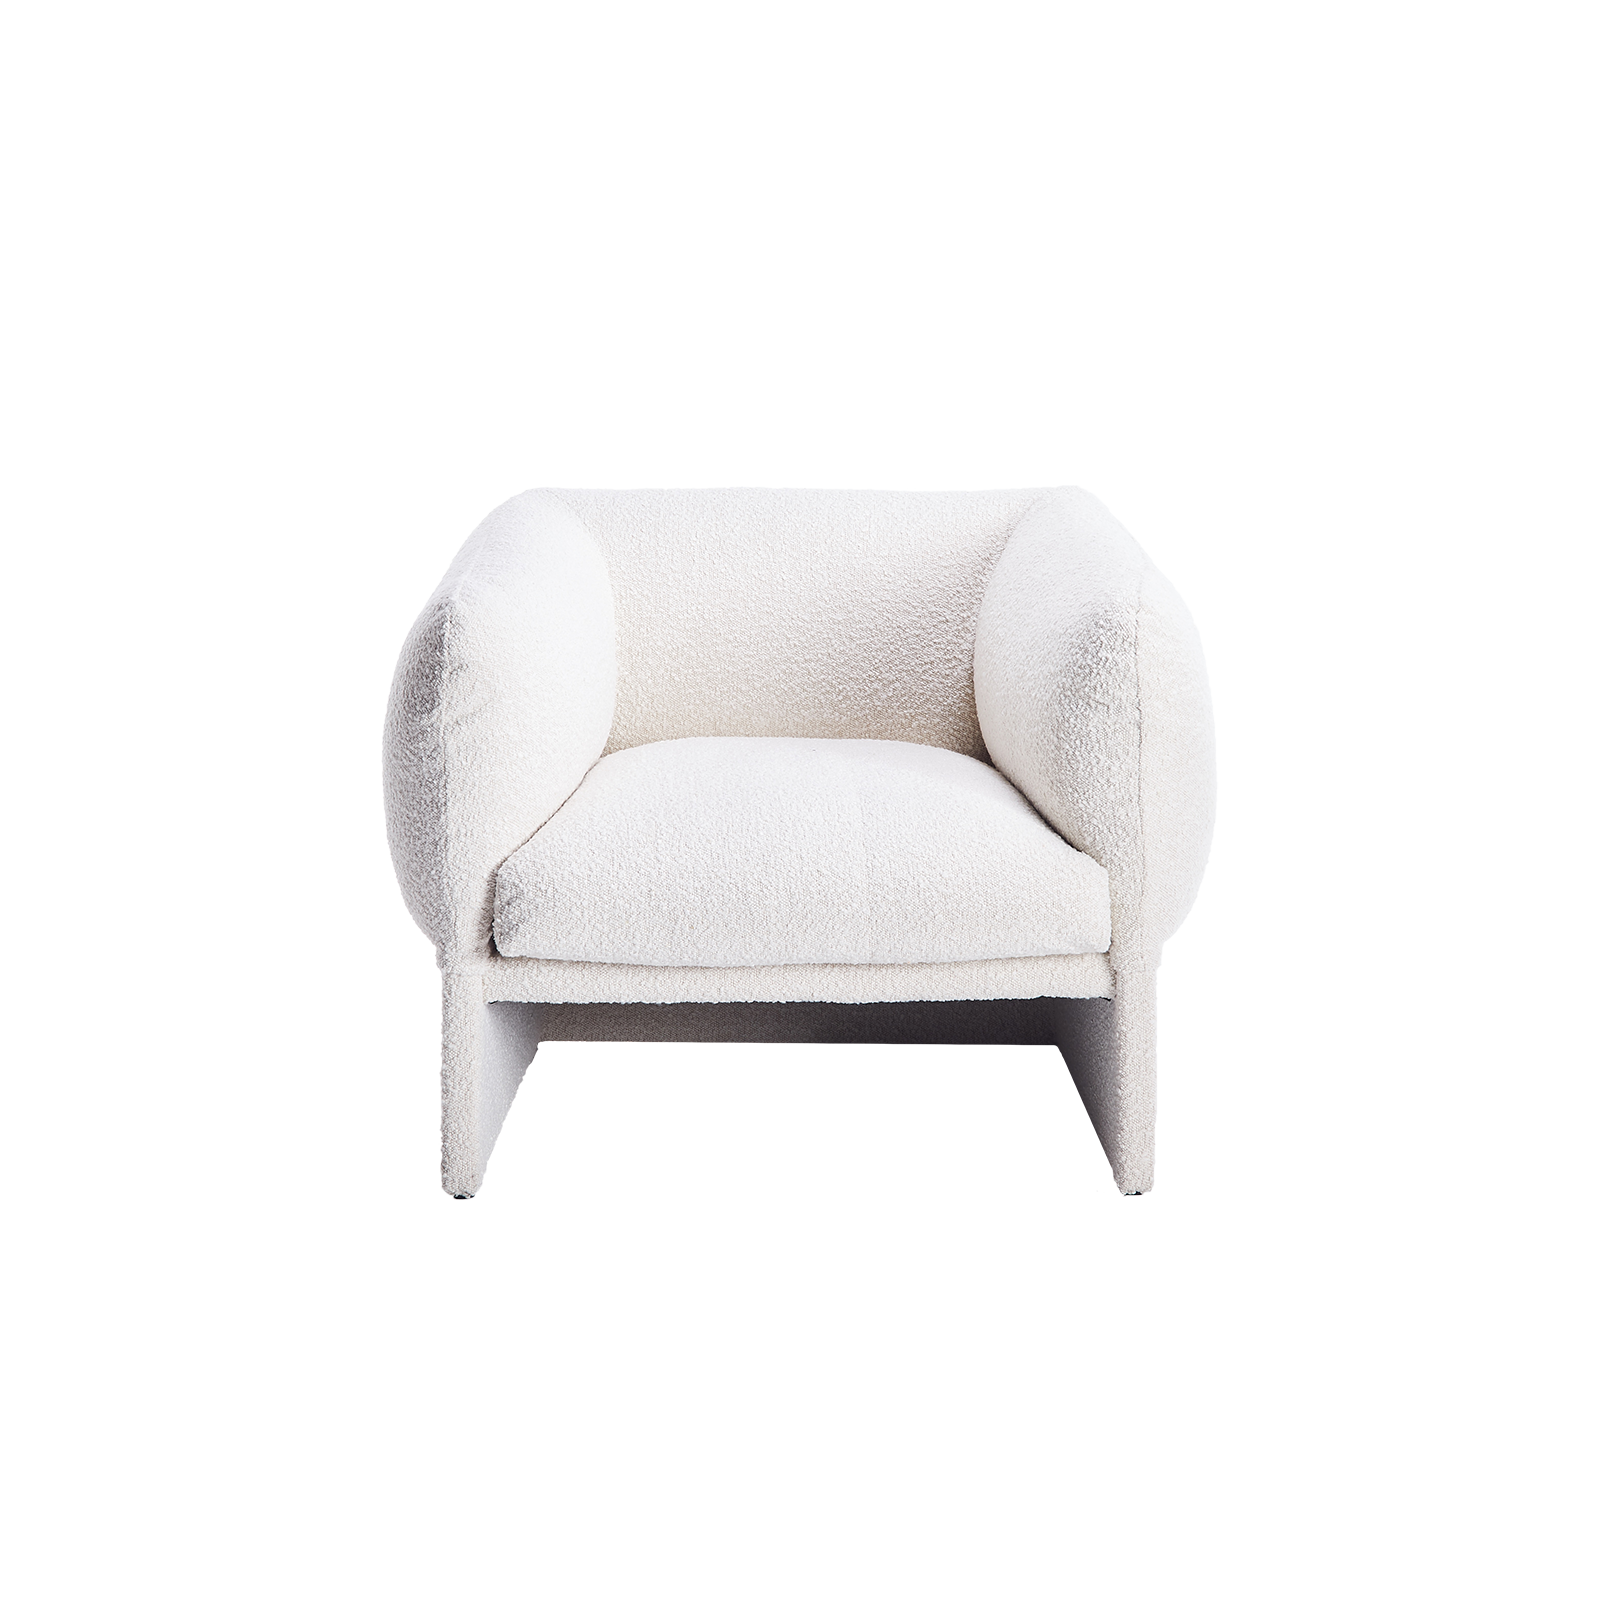 Tulip Lounge Chair - Maya A2267-2A